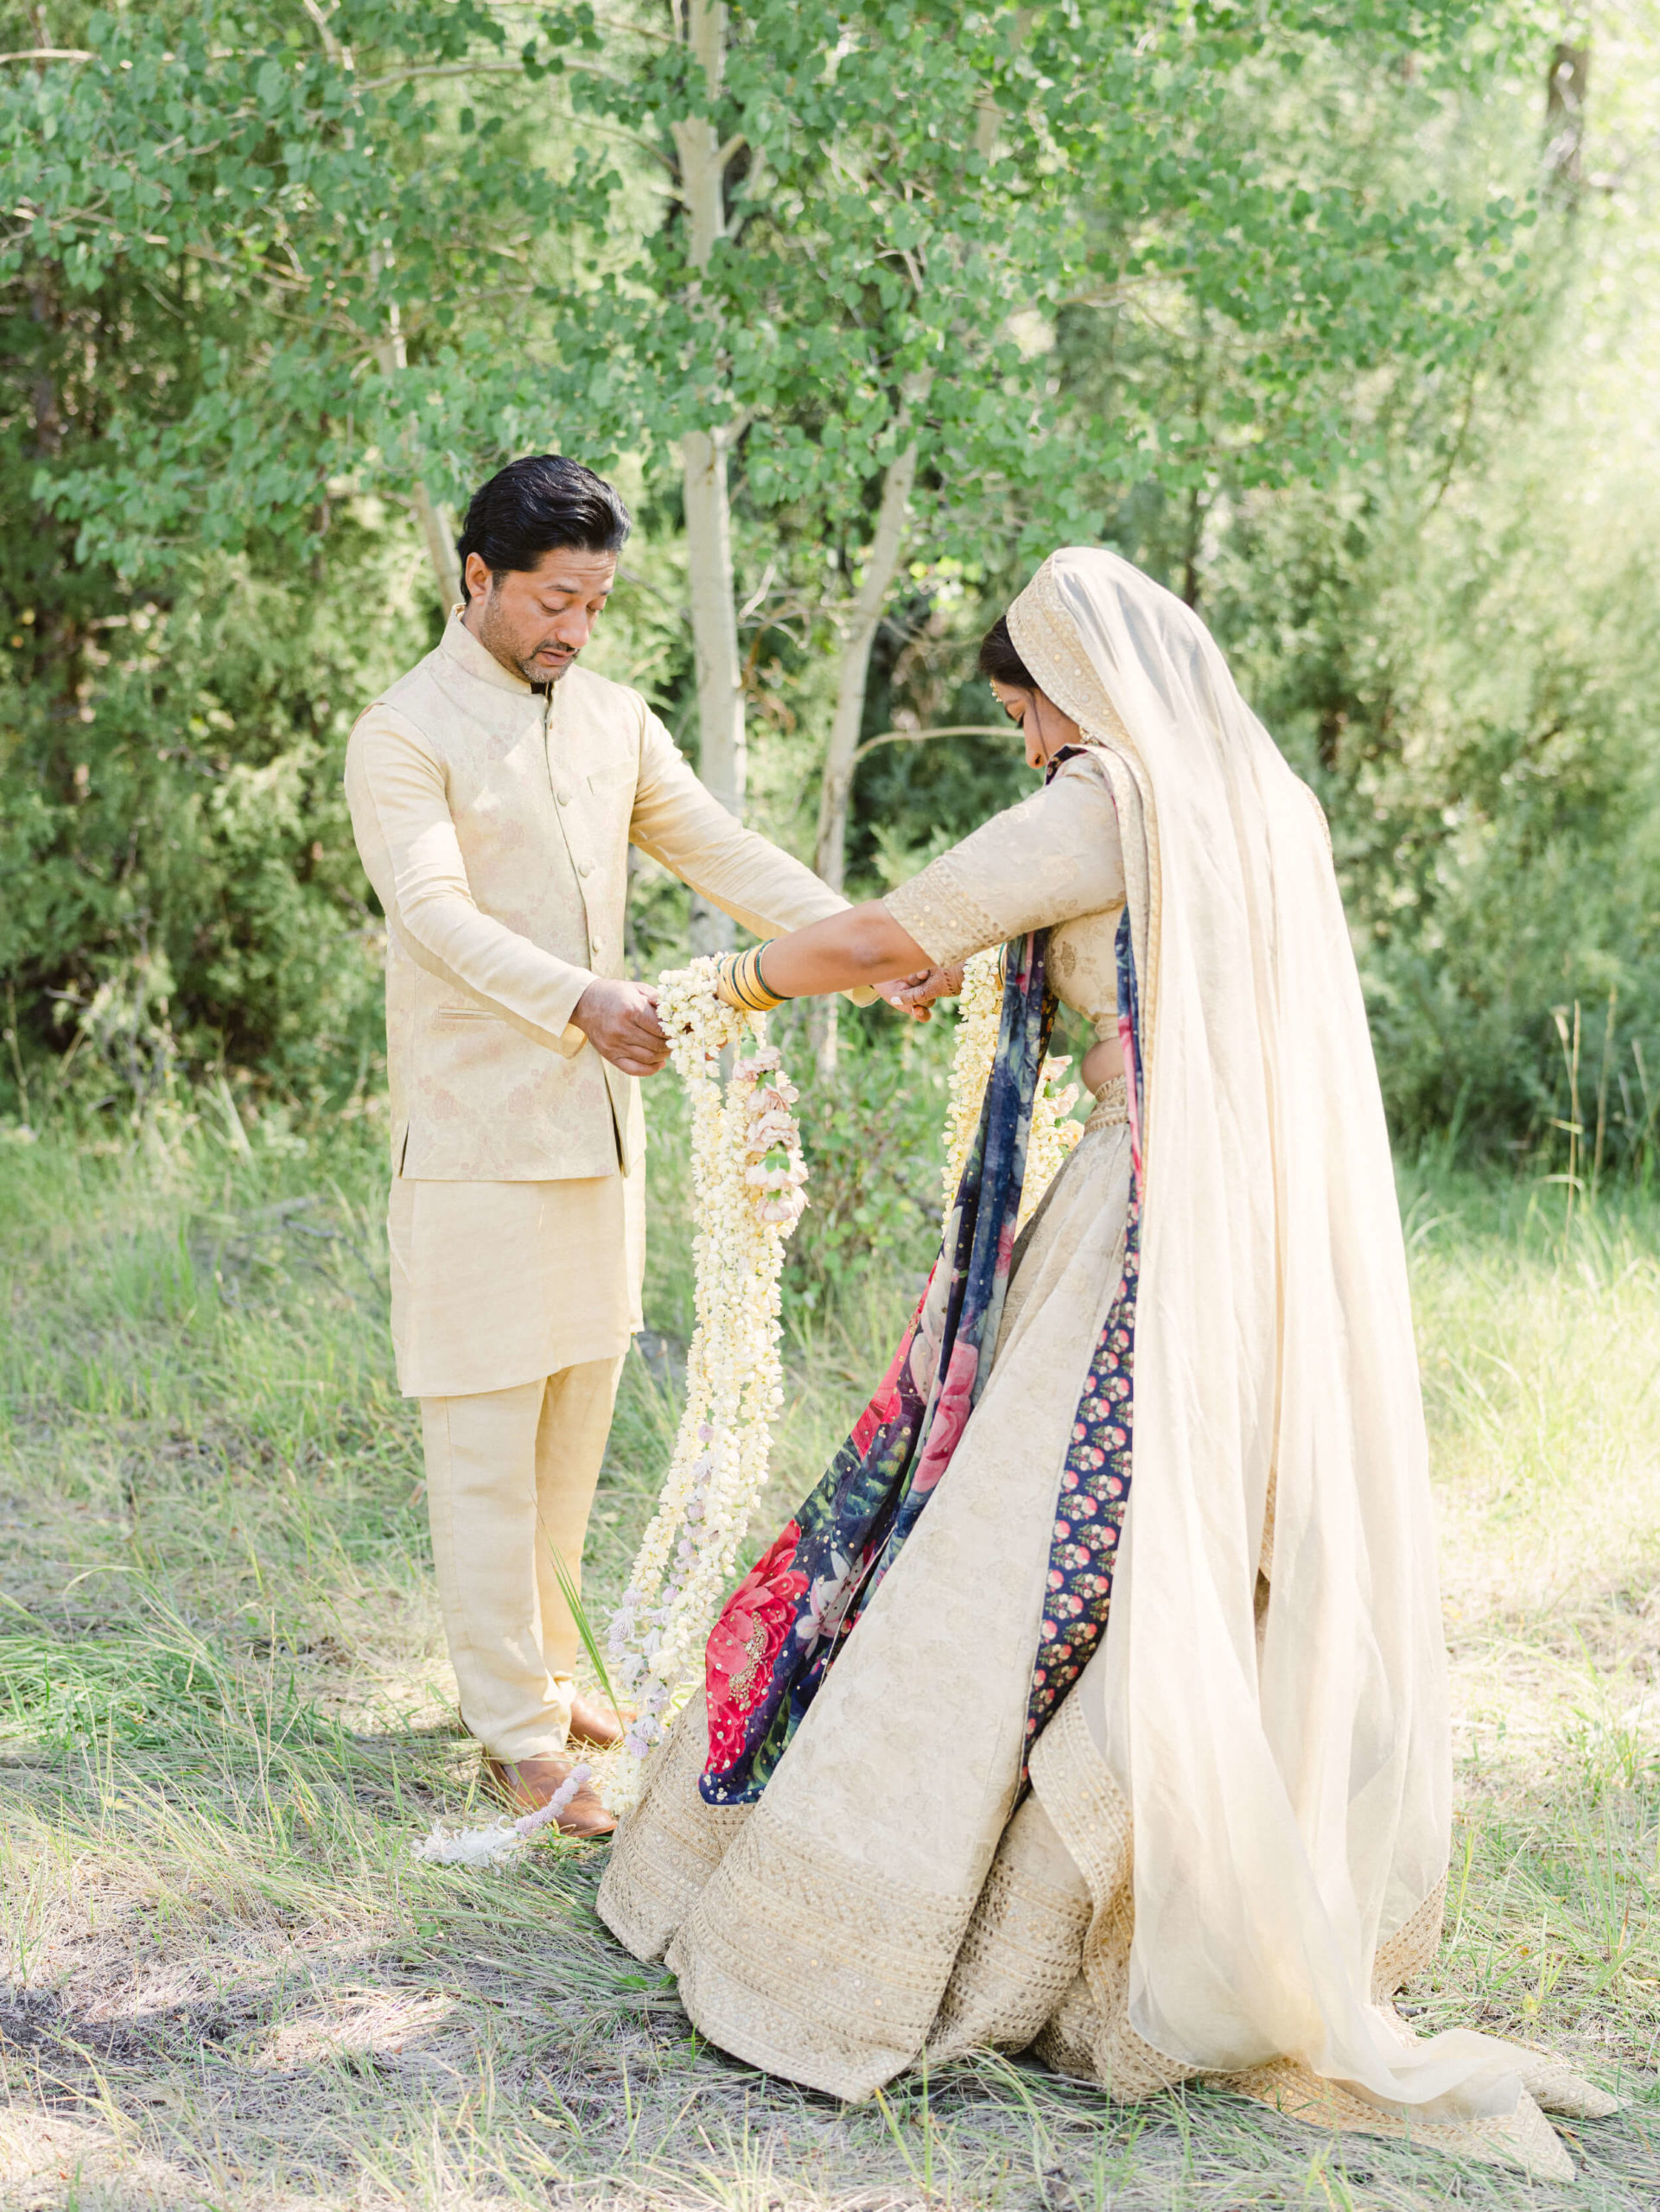 Ari admiring Sapna in her Indian wedding dress